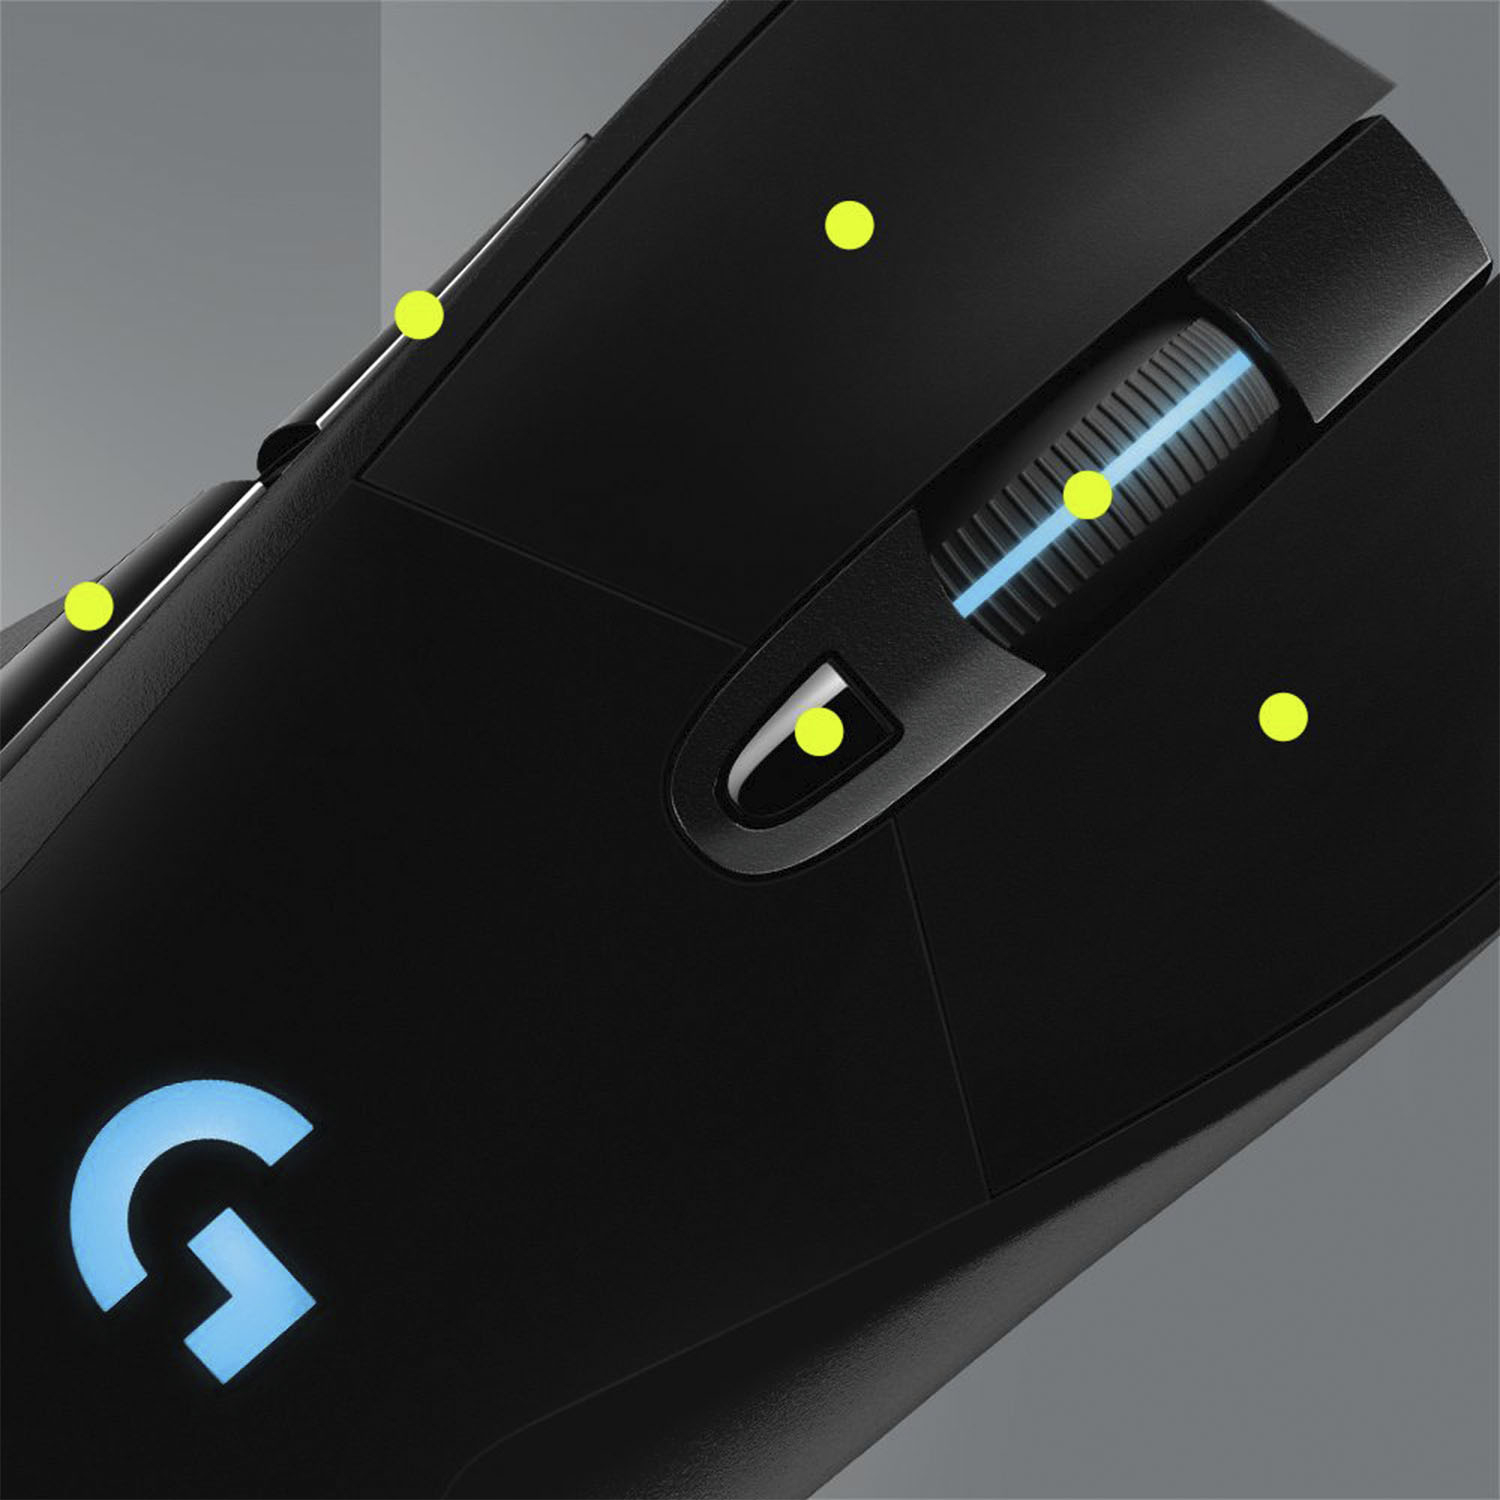  Logitech G703 Lightspeed Wireless Gaming Mouse W/Hero 25K  Sensor, PowerPlay Compatible, Lightsync RGB, Lightweight 95G+10G Optional,  100-25, 000 DPI, Rubber Side Grips - Black (Renewed) : Everything Else